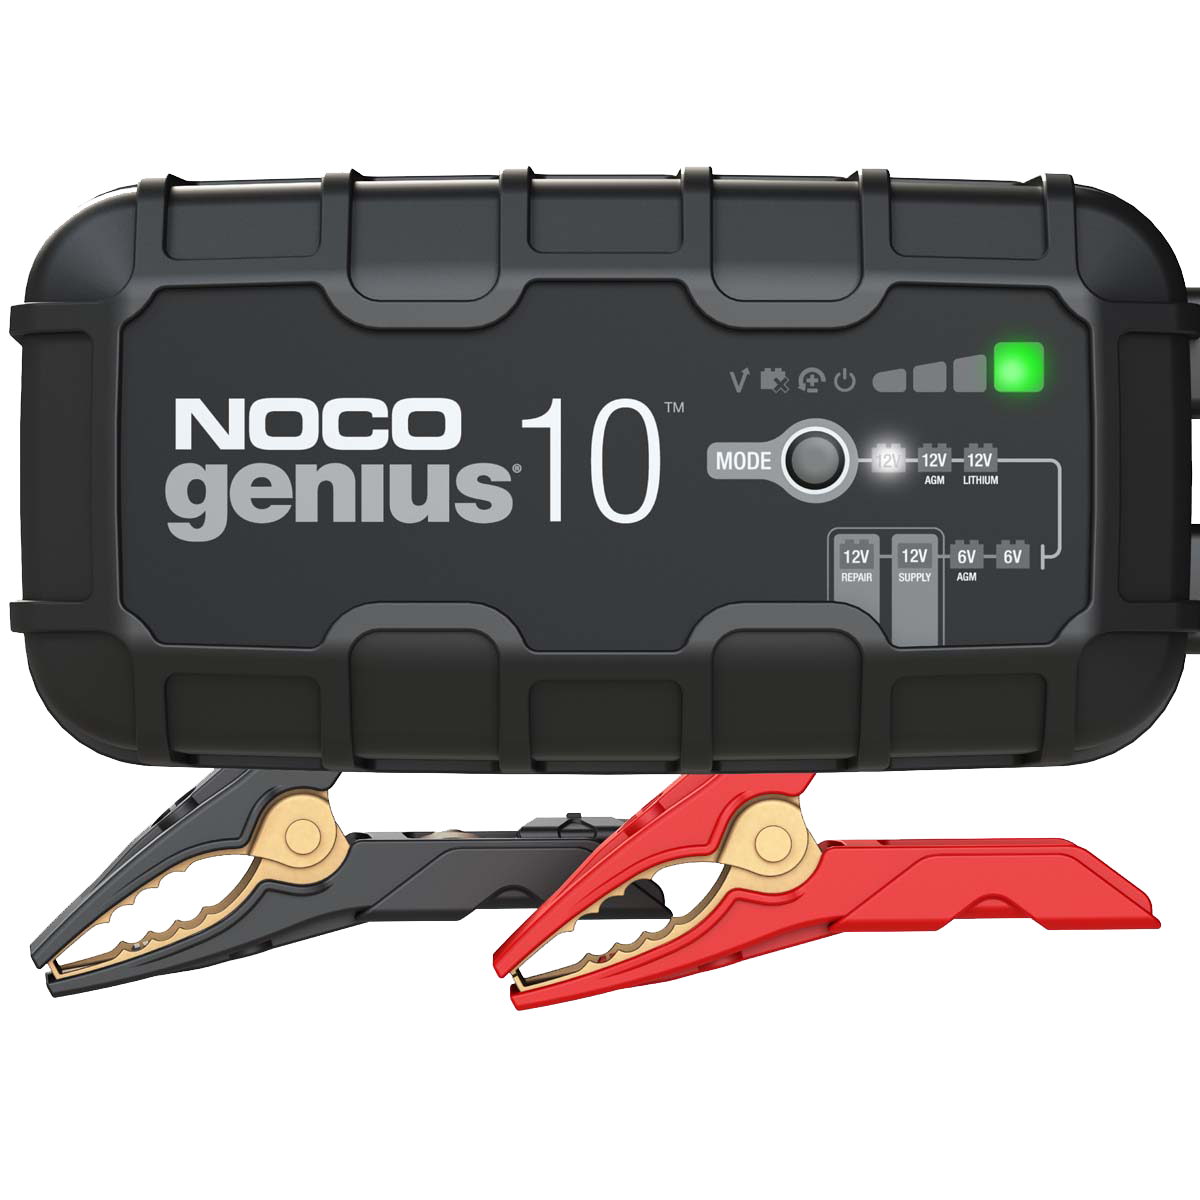 Noco GENIUS10 6V 12V 10A Battery Charger